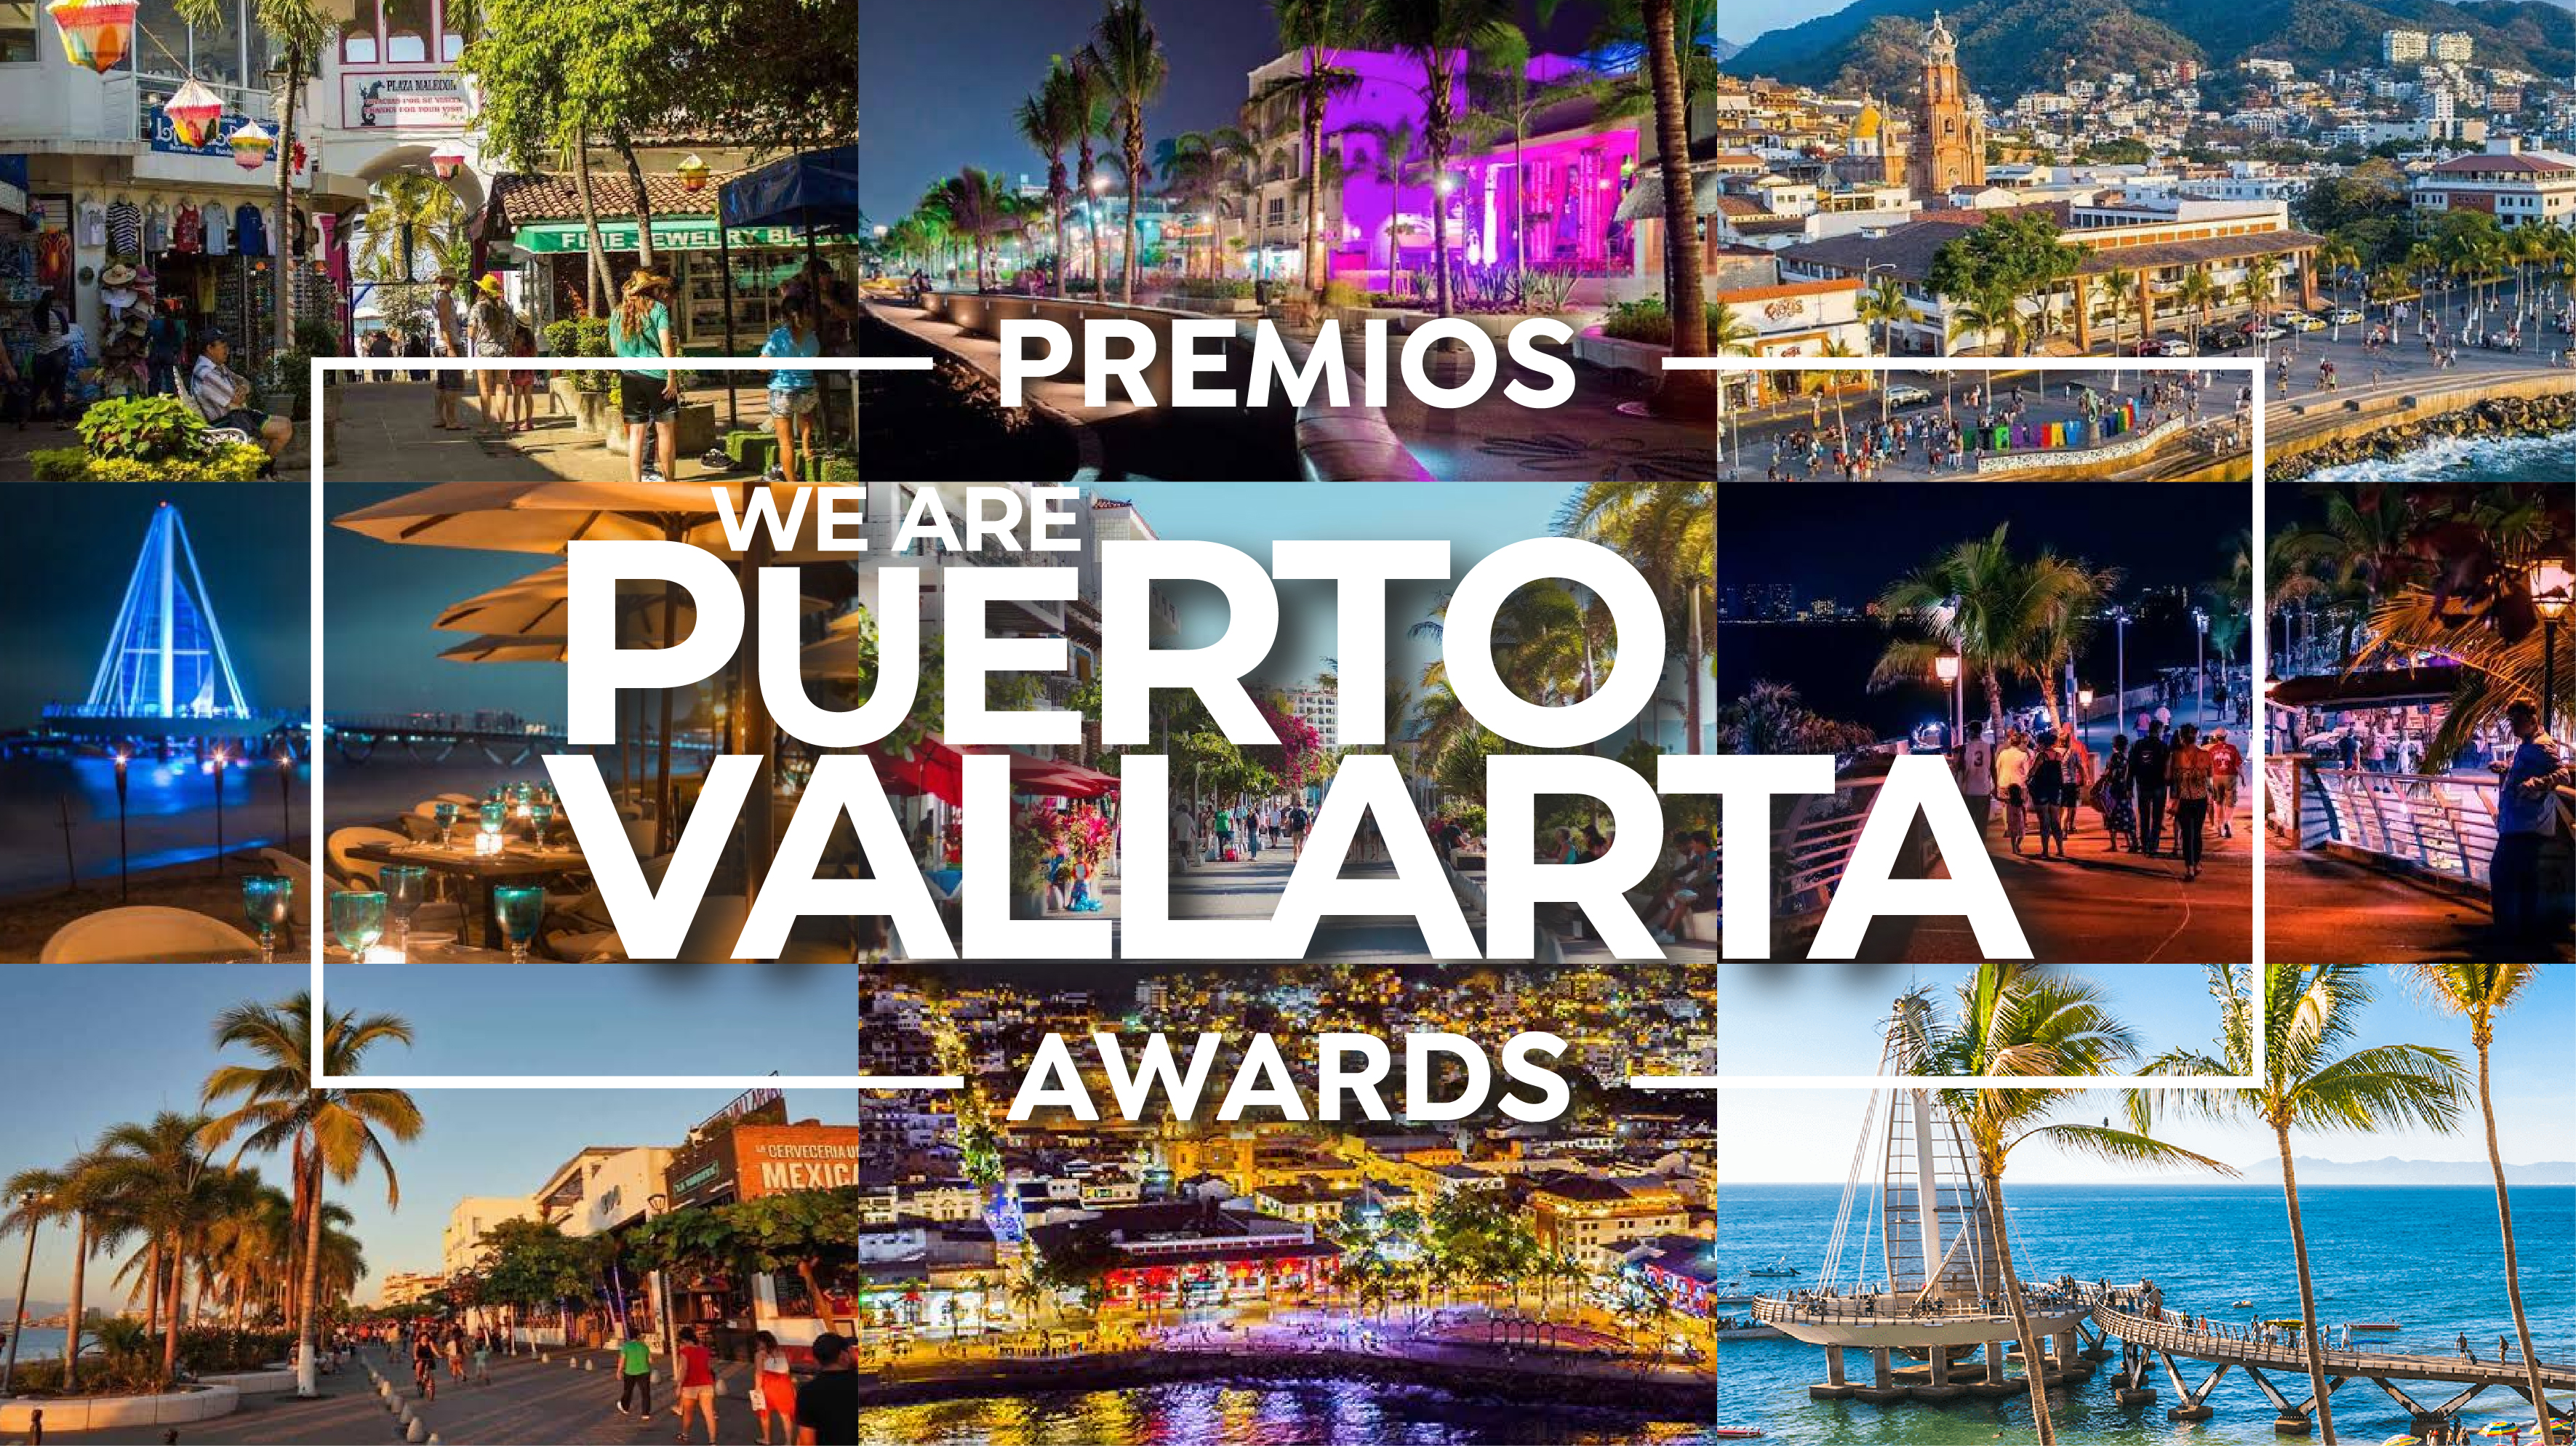 We Are Puerto Vallarta Awards